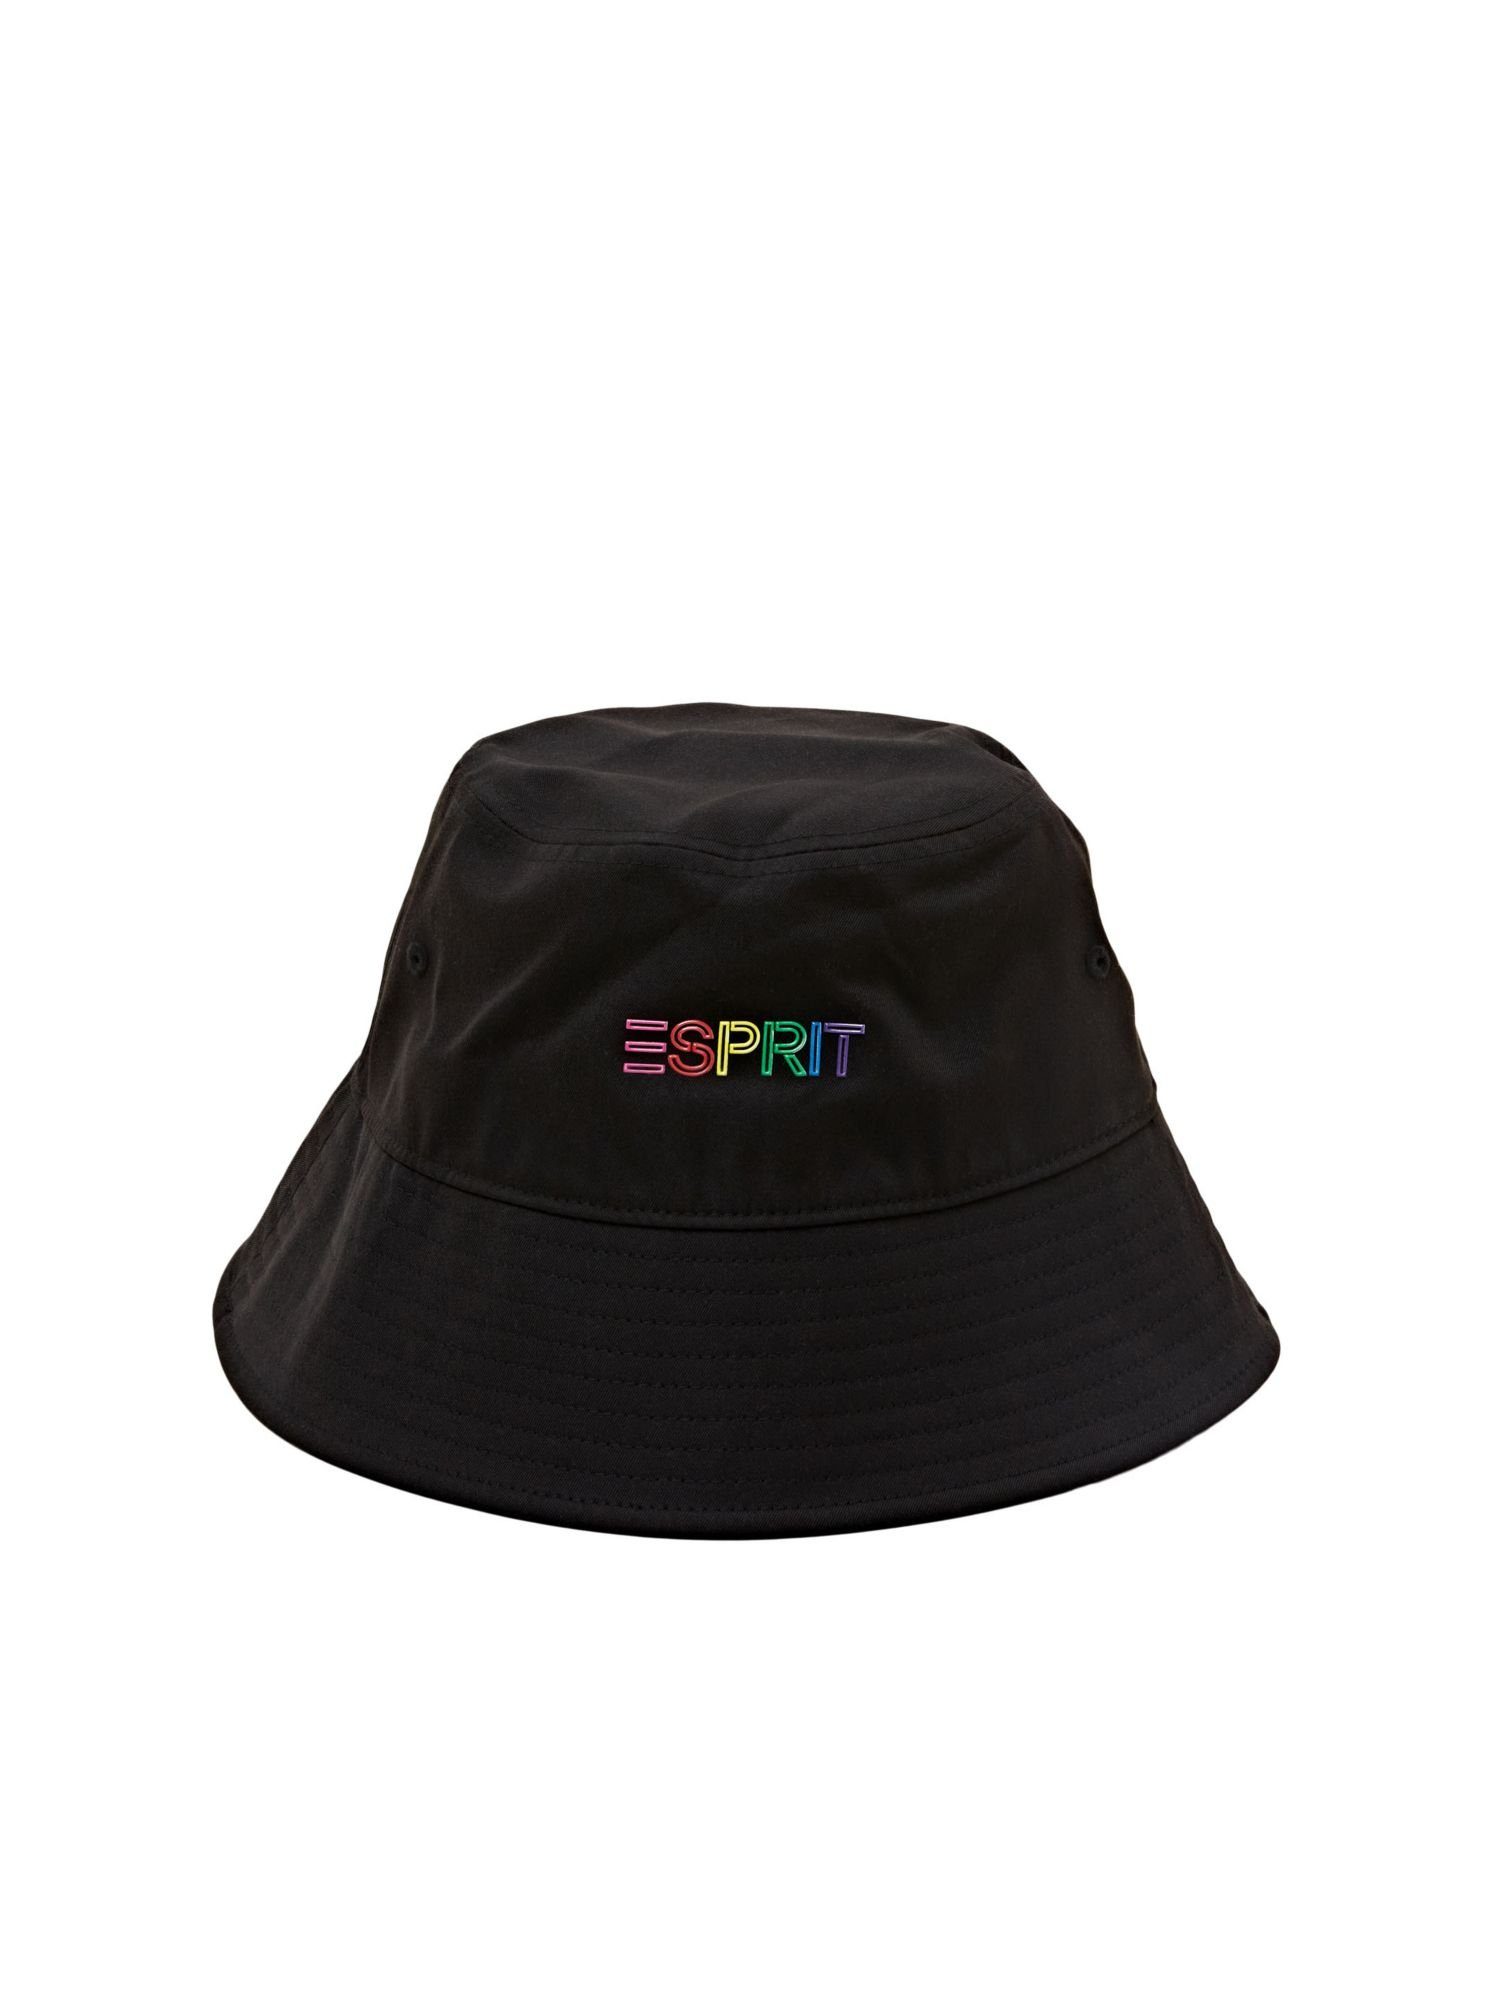 Esprit Baseball Cap Bucket Hat aus Twill mit Applikation BLACK